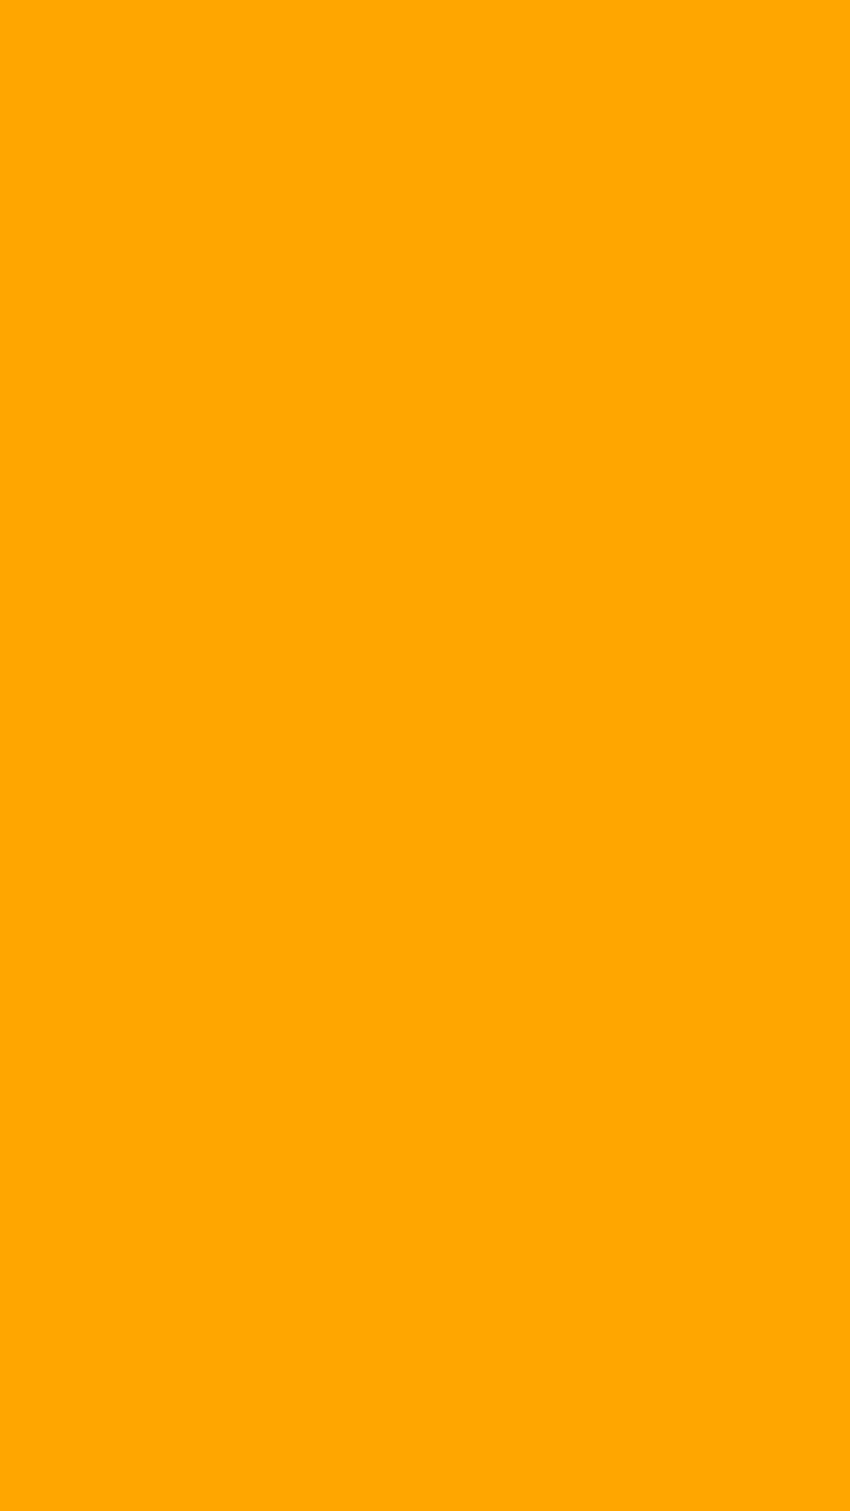 s de color sólido amarillo cromado para teléfono móvil, amarillo liso fondo de pantalla del teléfono